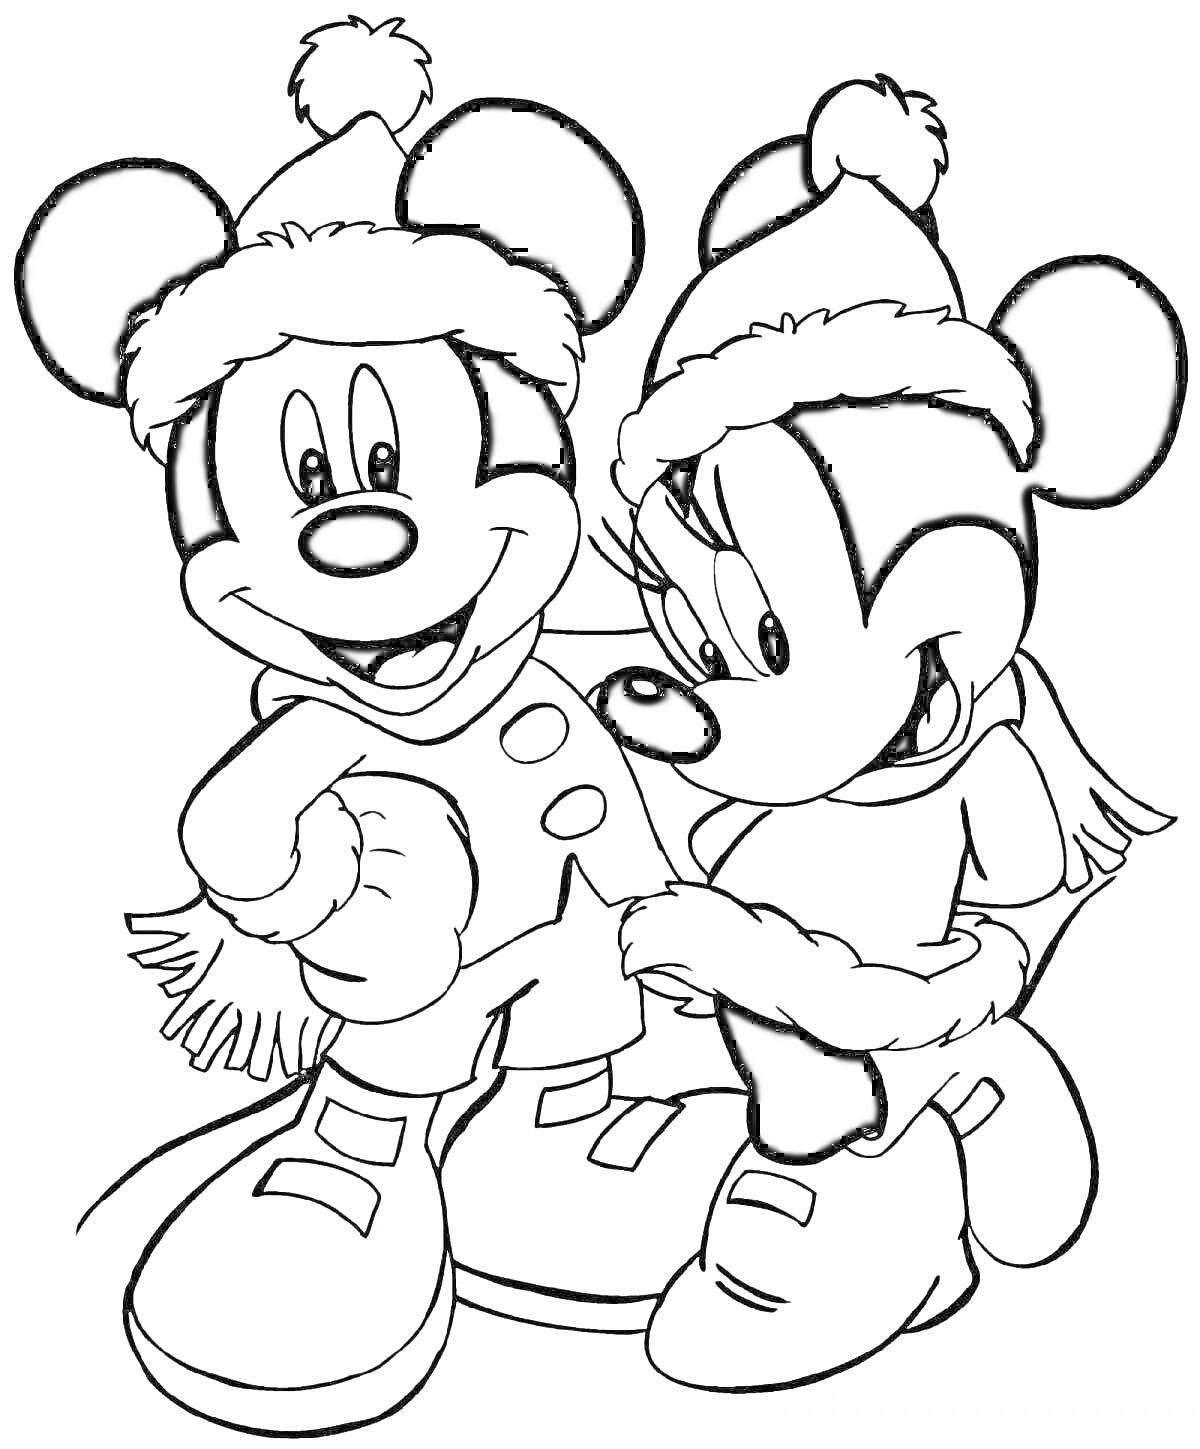 Раскраска Микки Маус и Минни Маус в зимней одежде с шарфами и шапками с помпонами